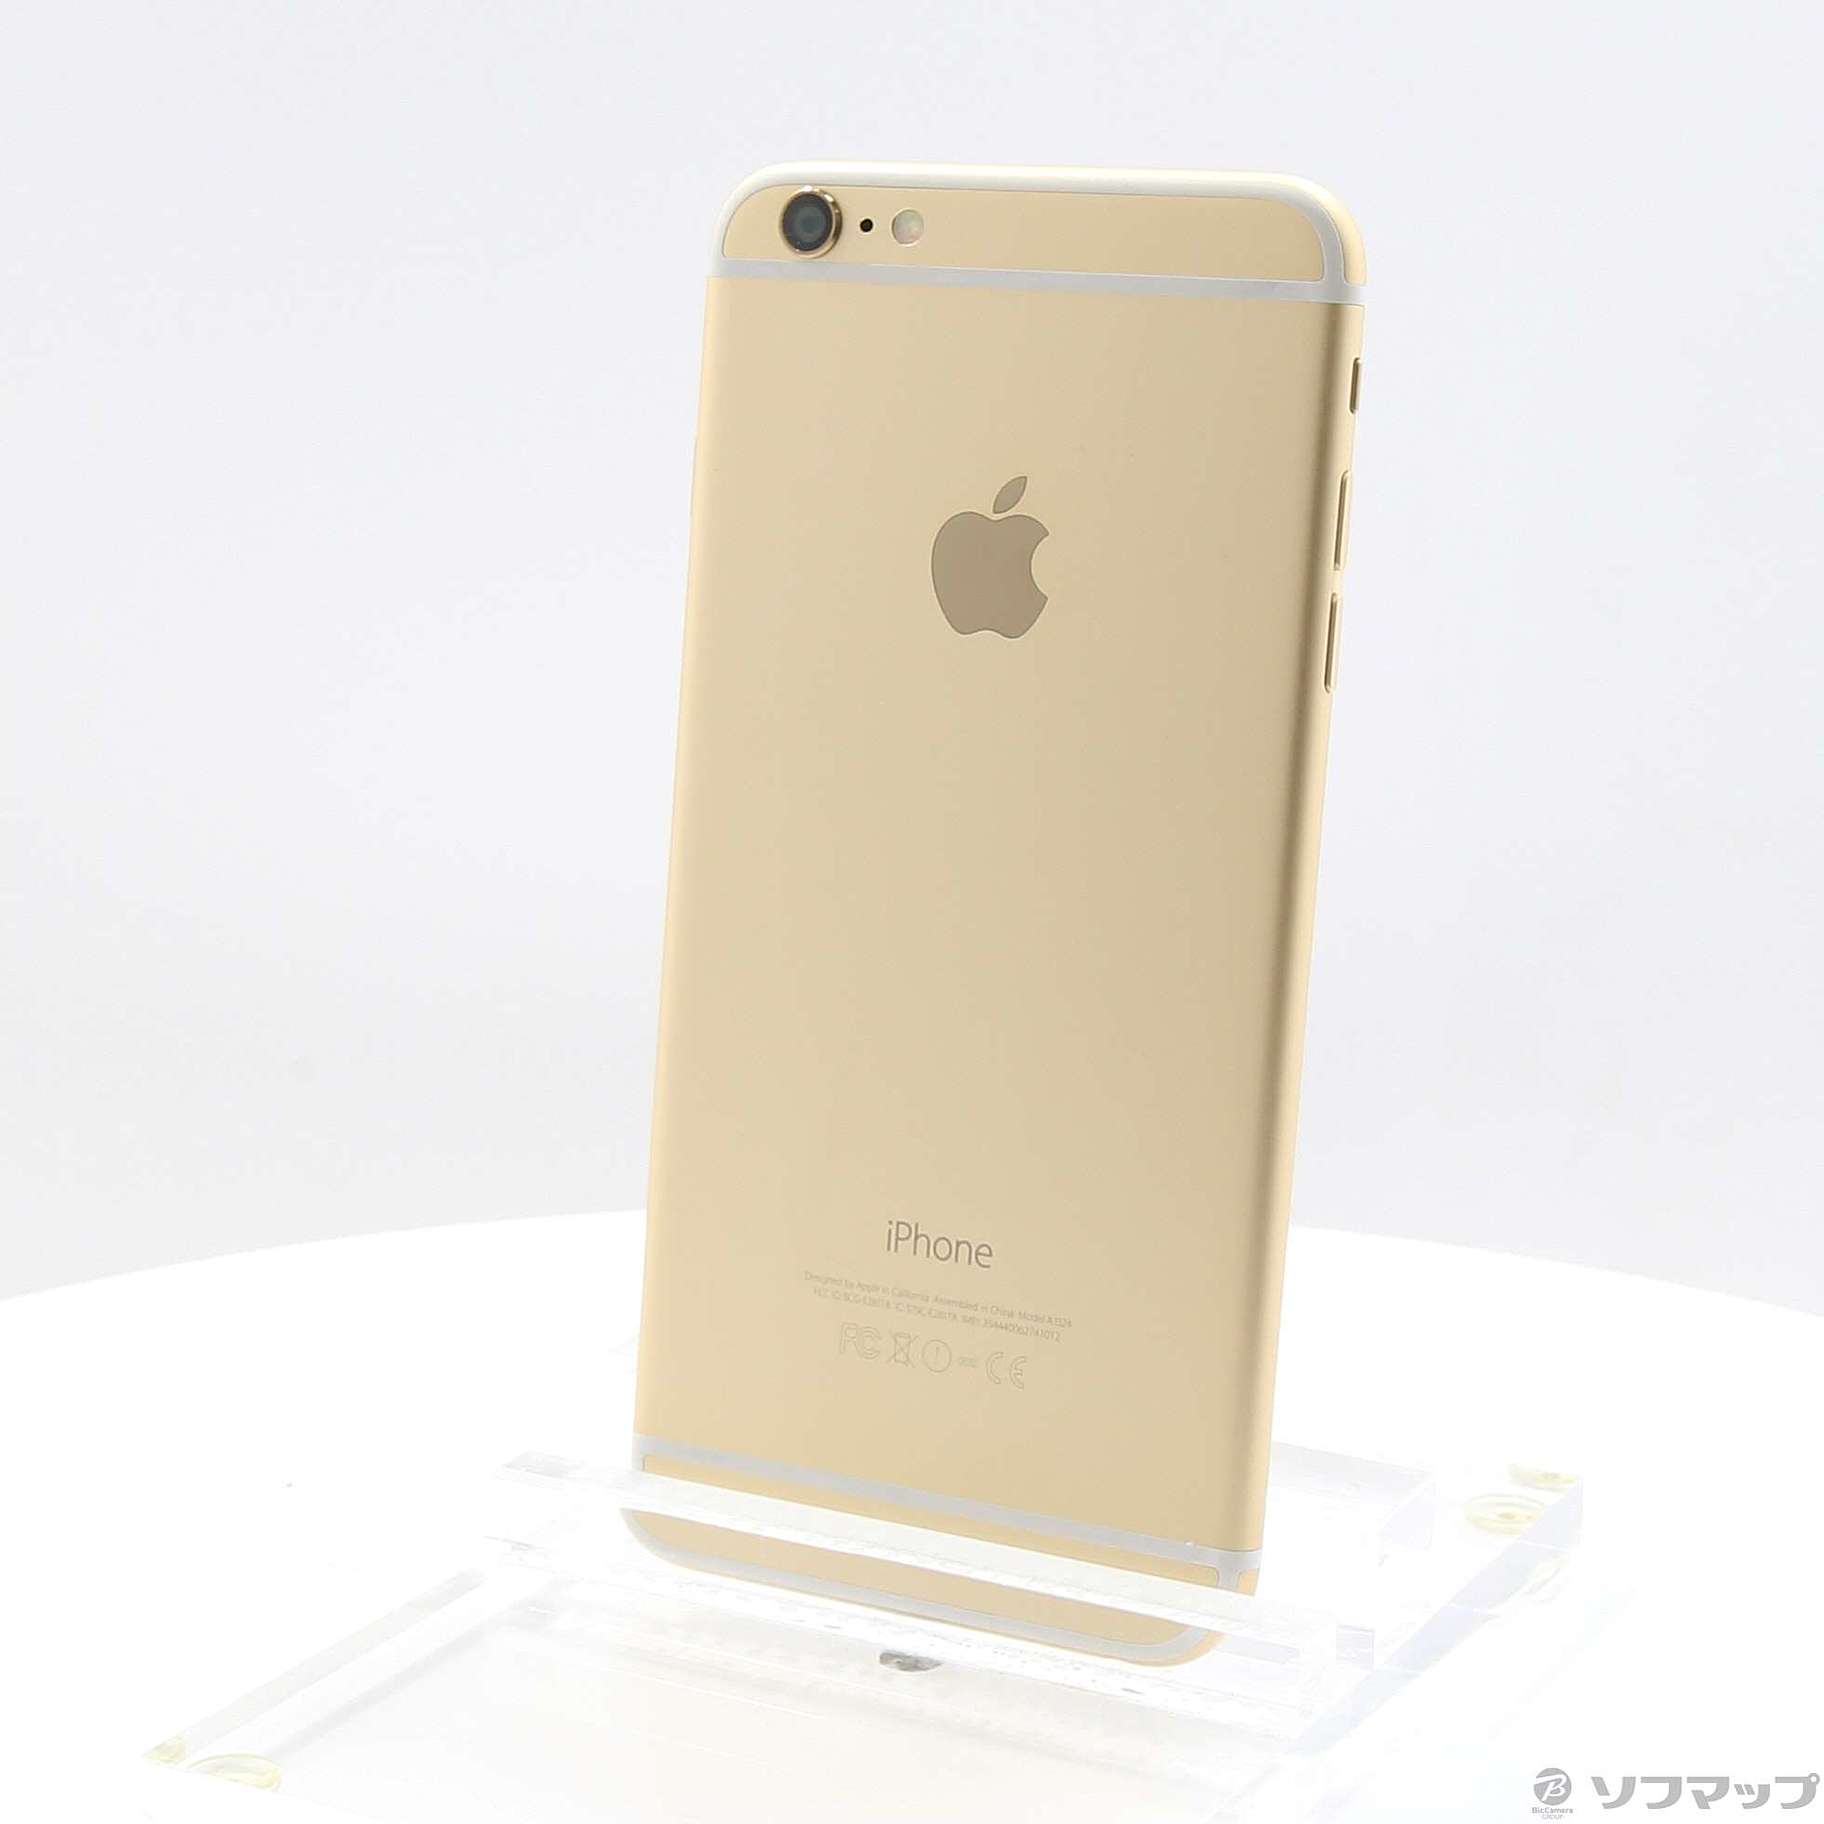 iPhone 6 Gold 16GB Softbank-